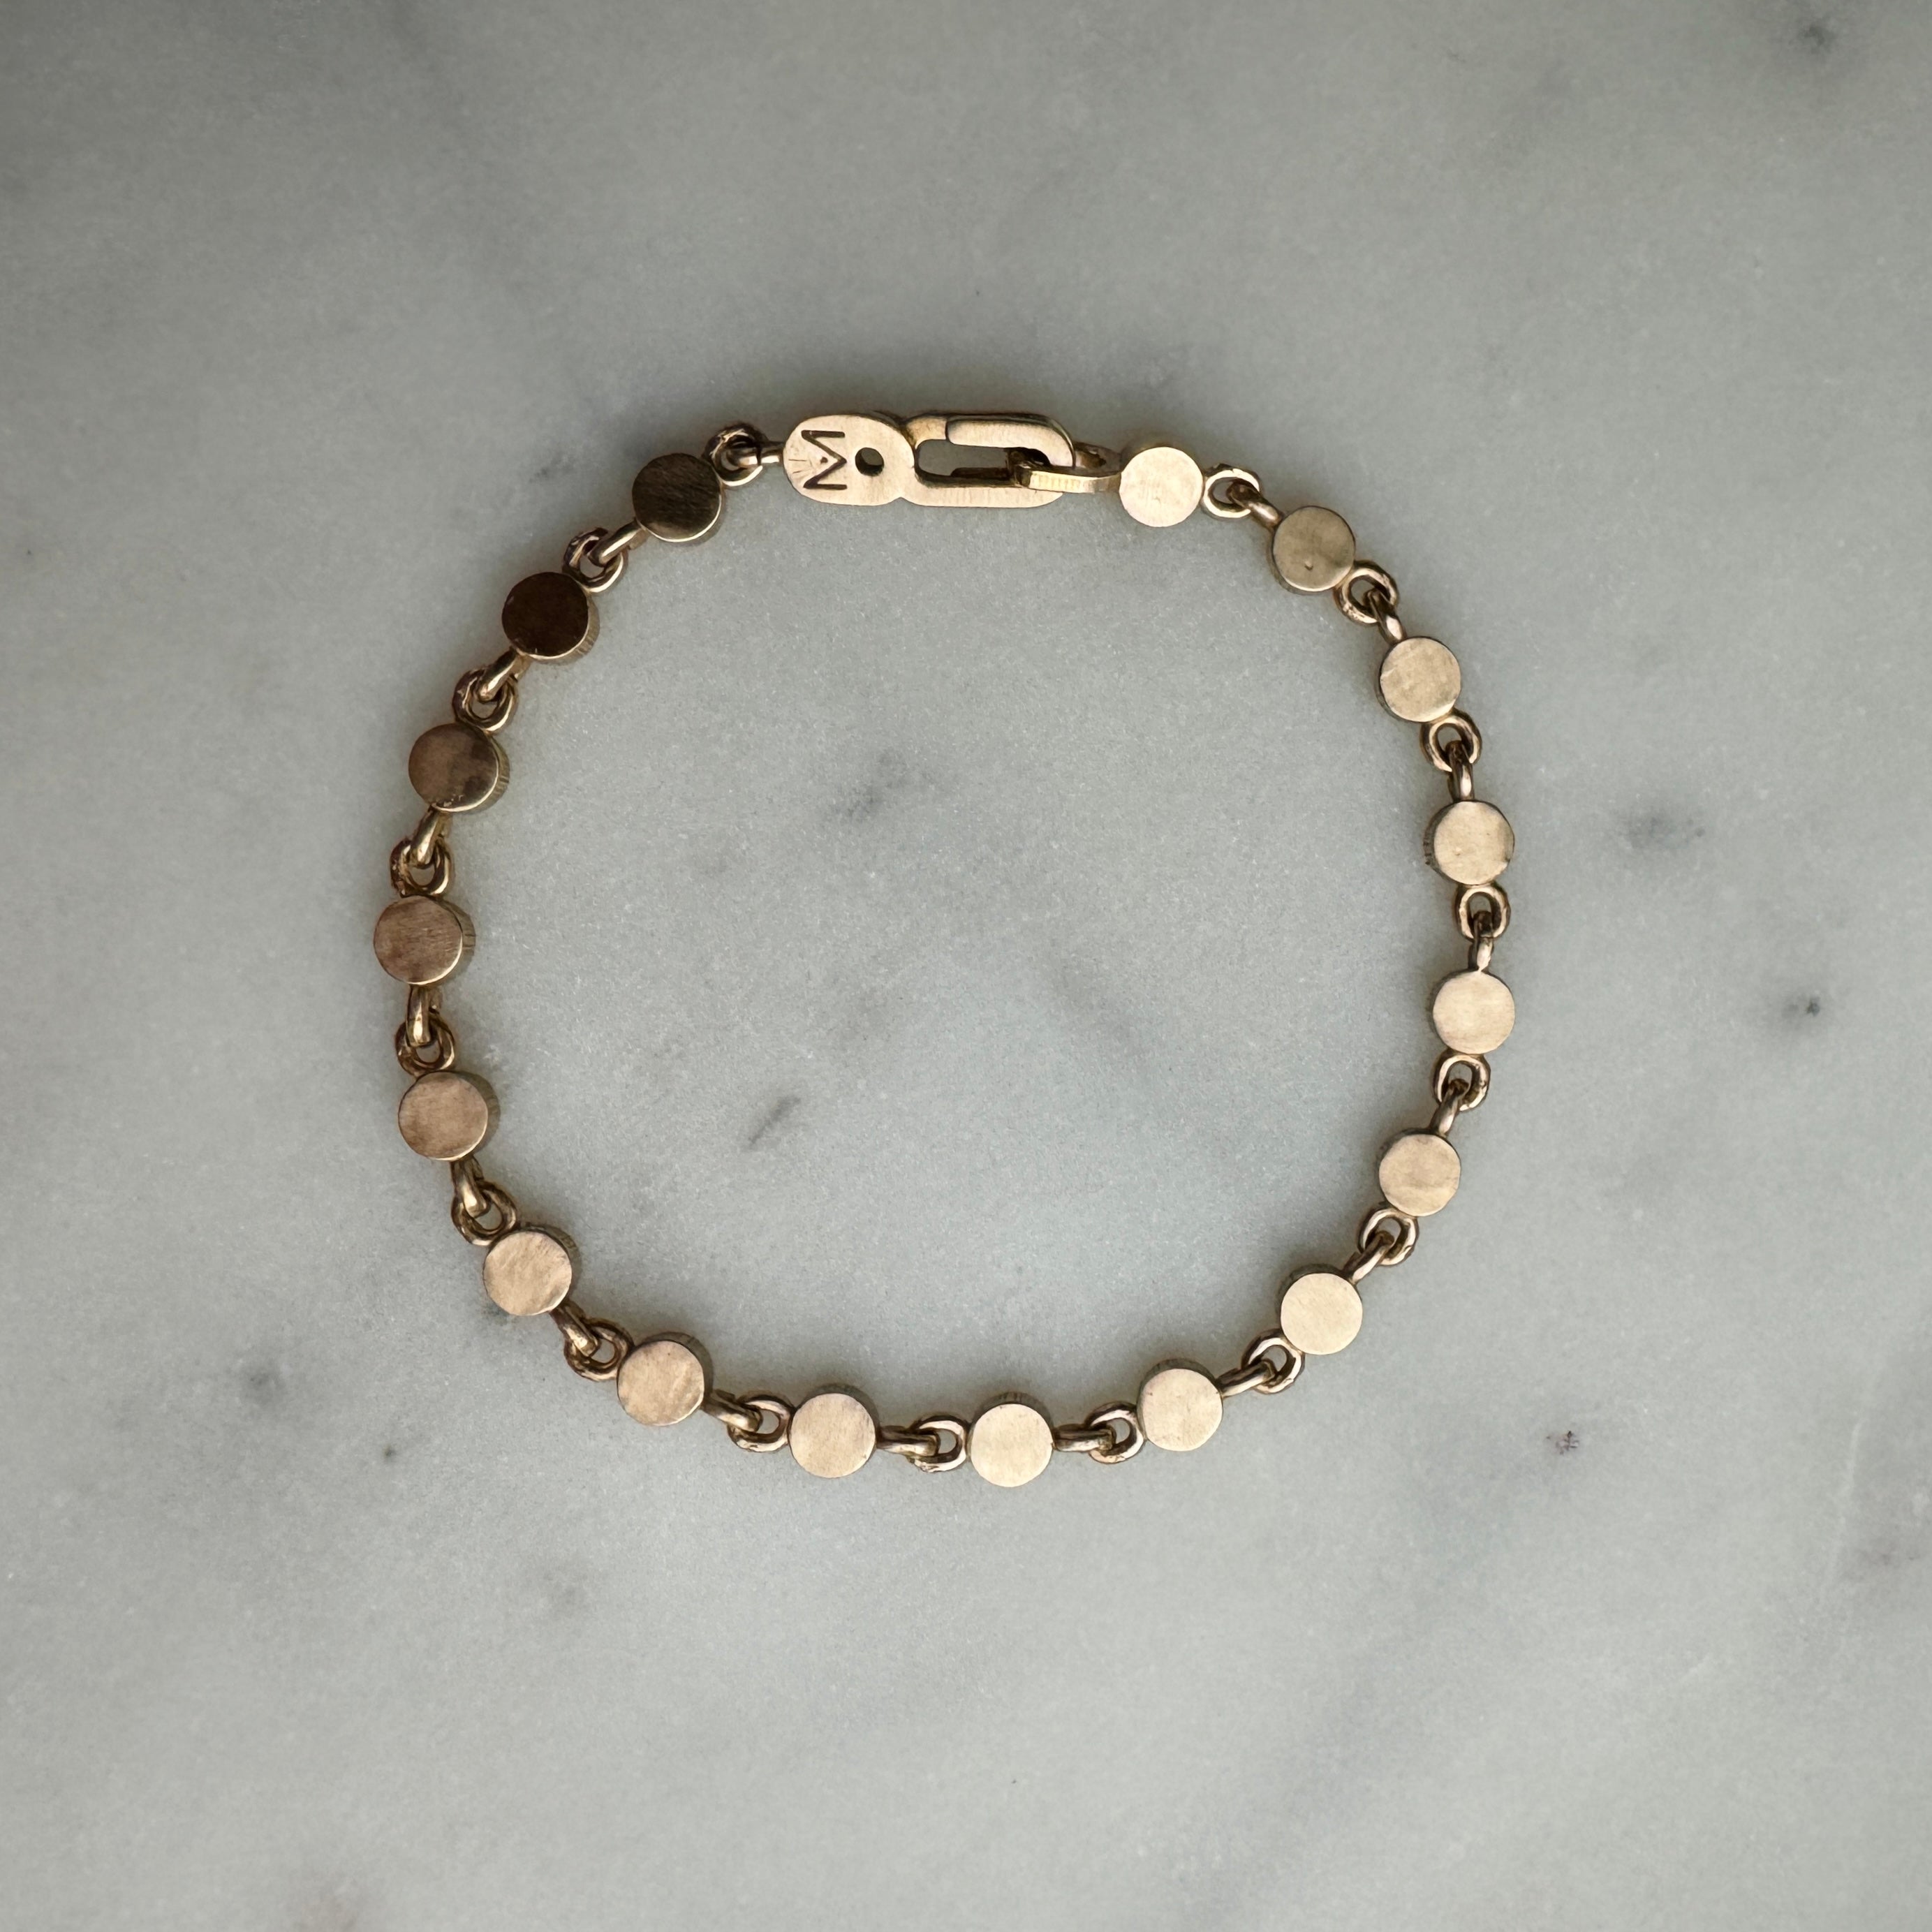 Nancy Linkin's Single Overlay Bronze Cuff | Art Jewelry